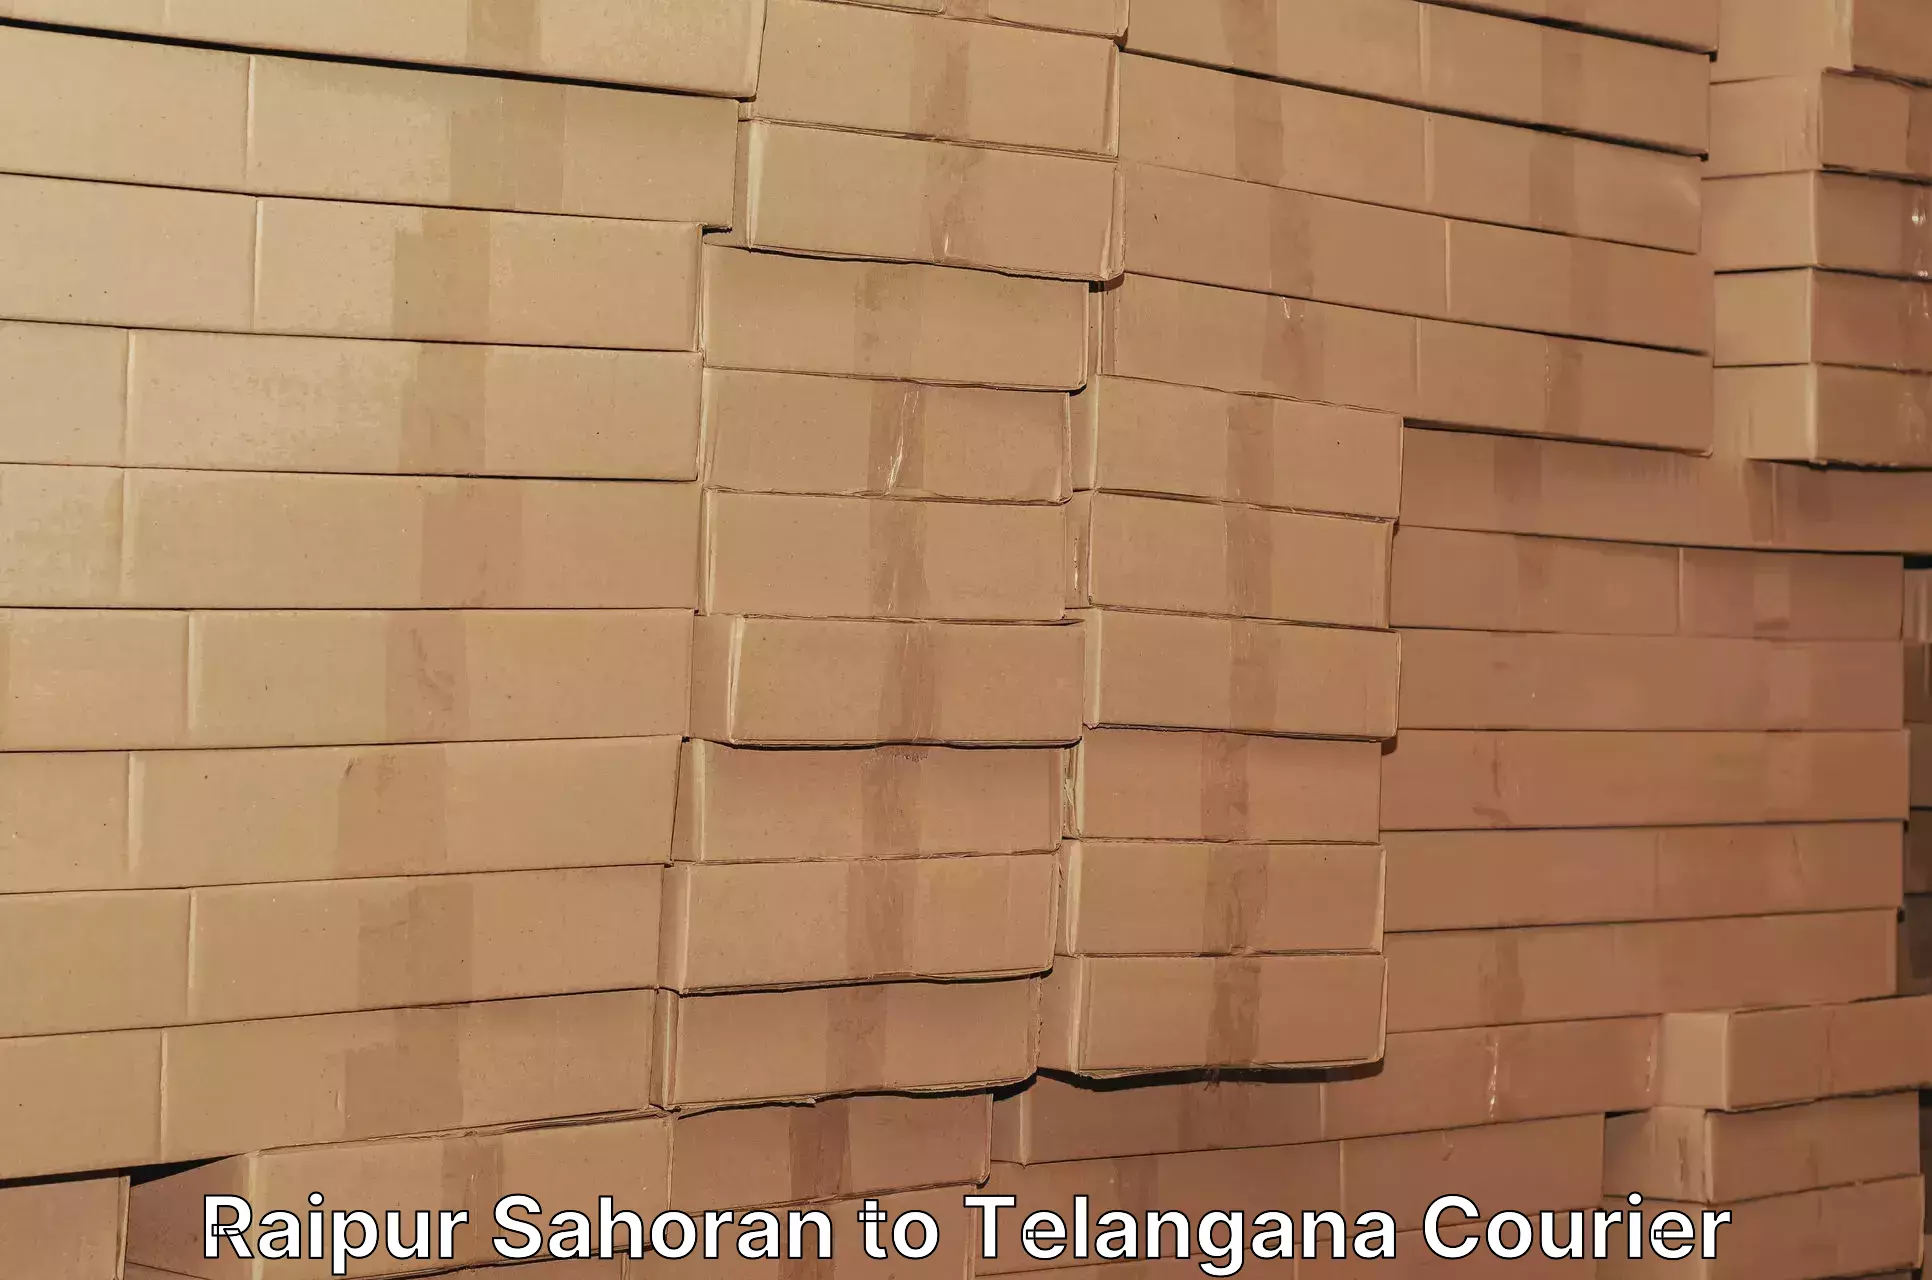 Courier app Raipur Sahoran to Sangareddy